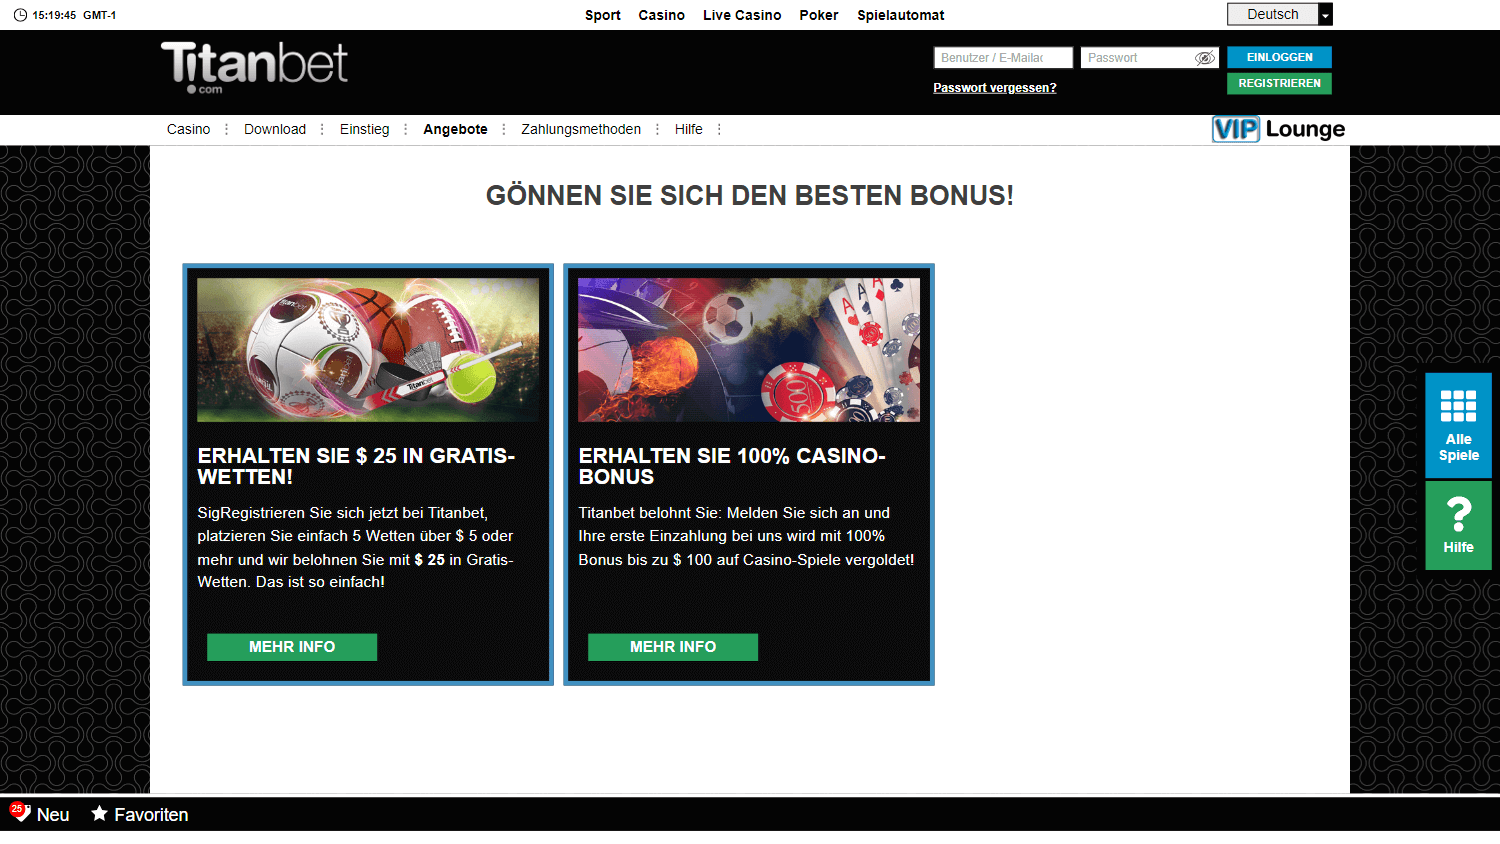 titanbet_casino_promotions_desktop